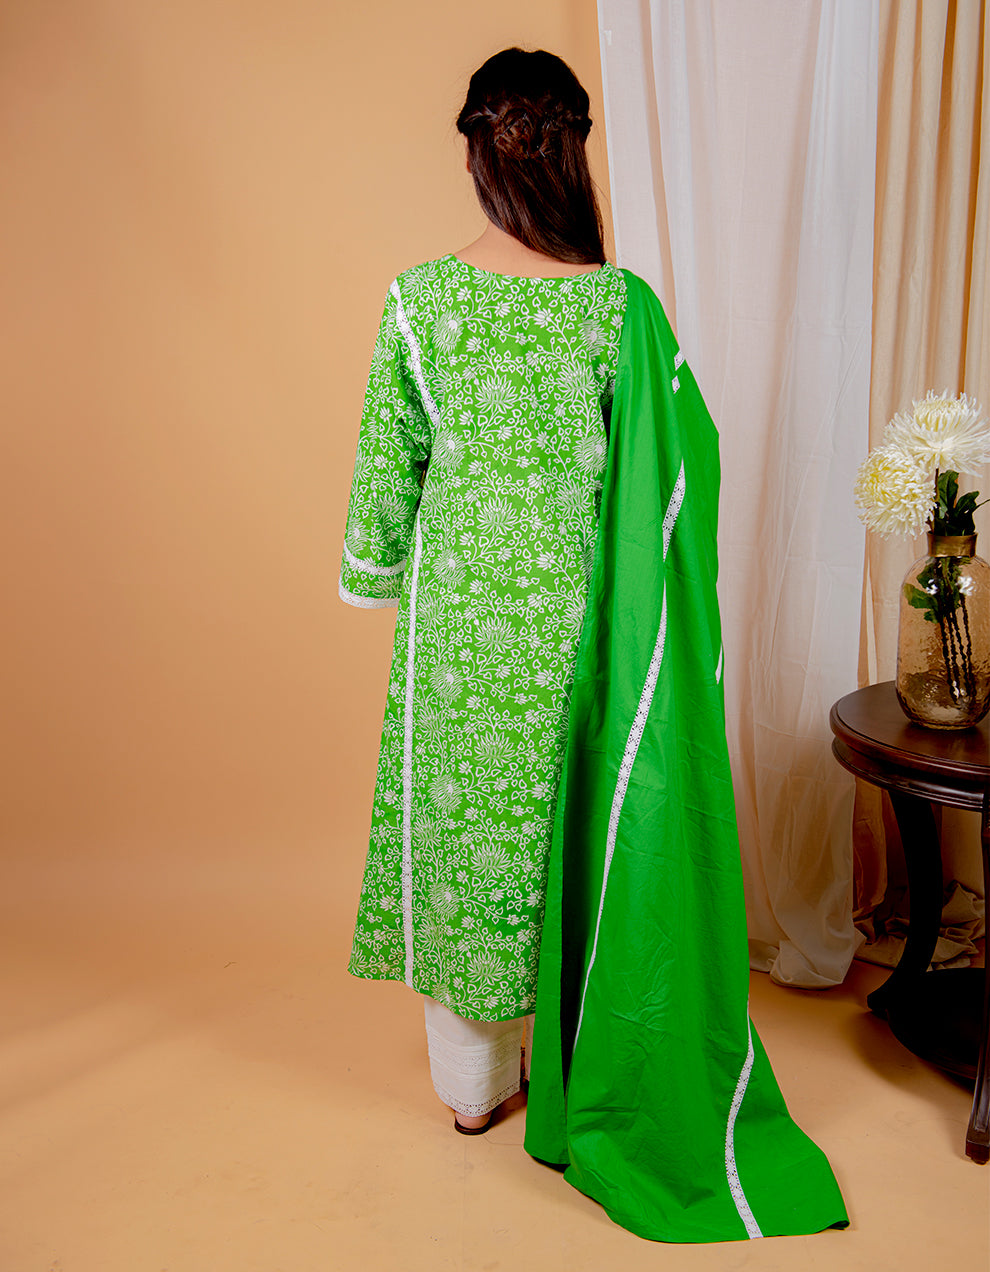 block-printed-light-green-straight-cut-kurta-with-pants-and-a-cotton-lace-dupatta